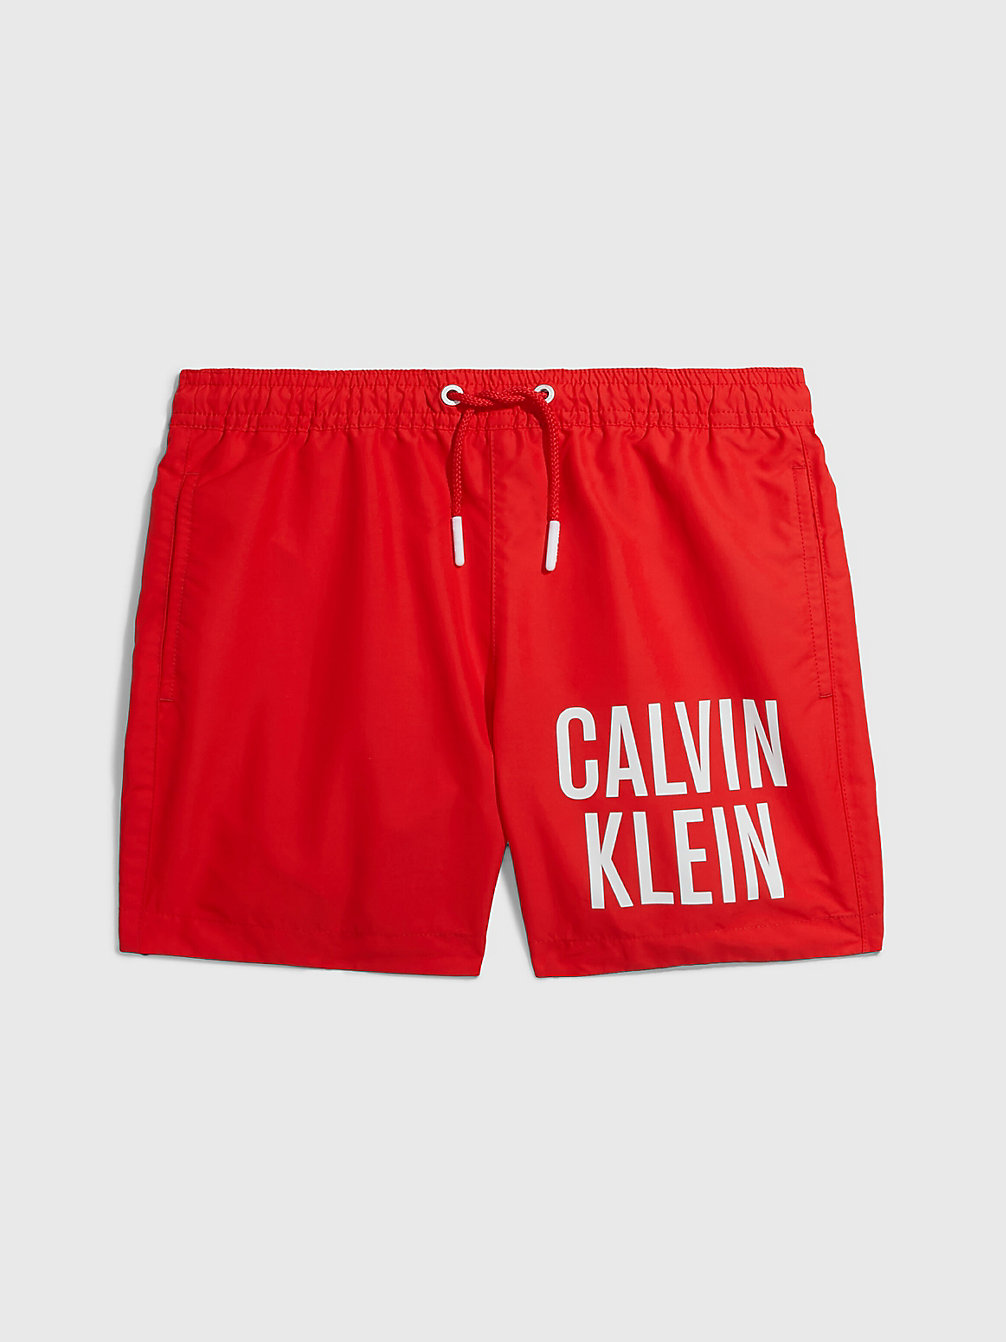 CAJUN RED > Chłopięce Szorty Kąpielowe - Intense Power > undefined boys - Calvin Klein